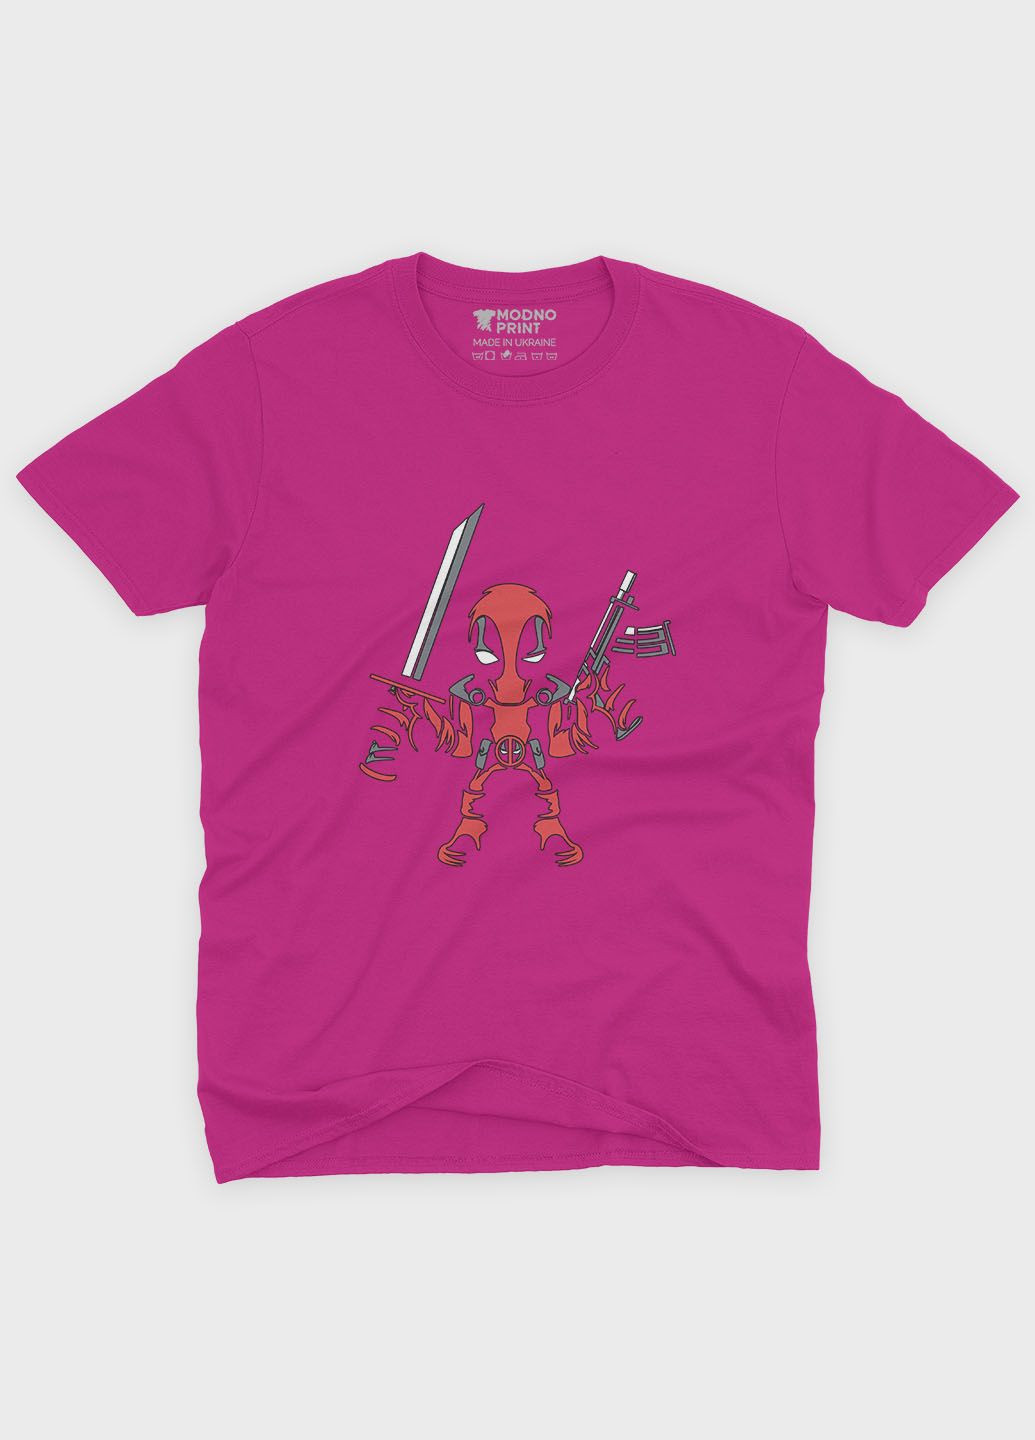 Розовая демисезонная футболка для мальчика с принтом антигероя - дедпул (ts001-1-fuxj-006-015-037-b) Modno